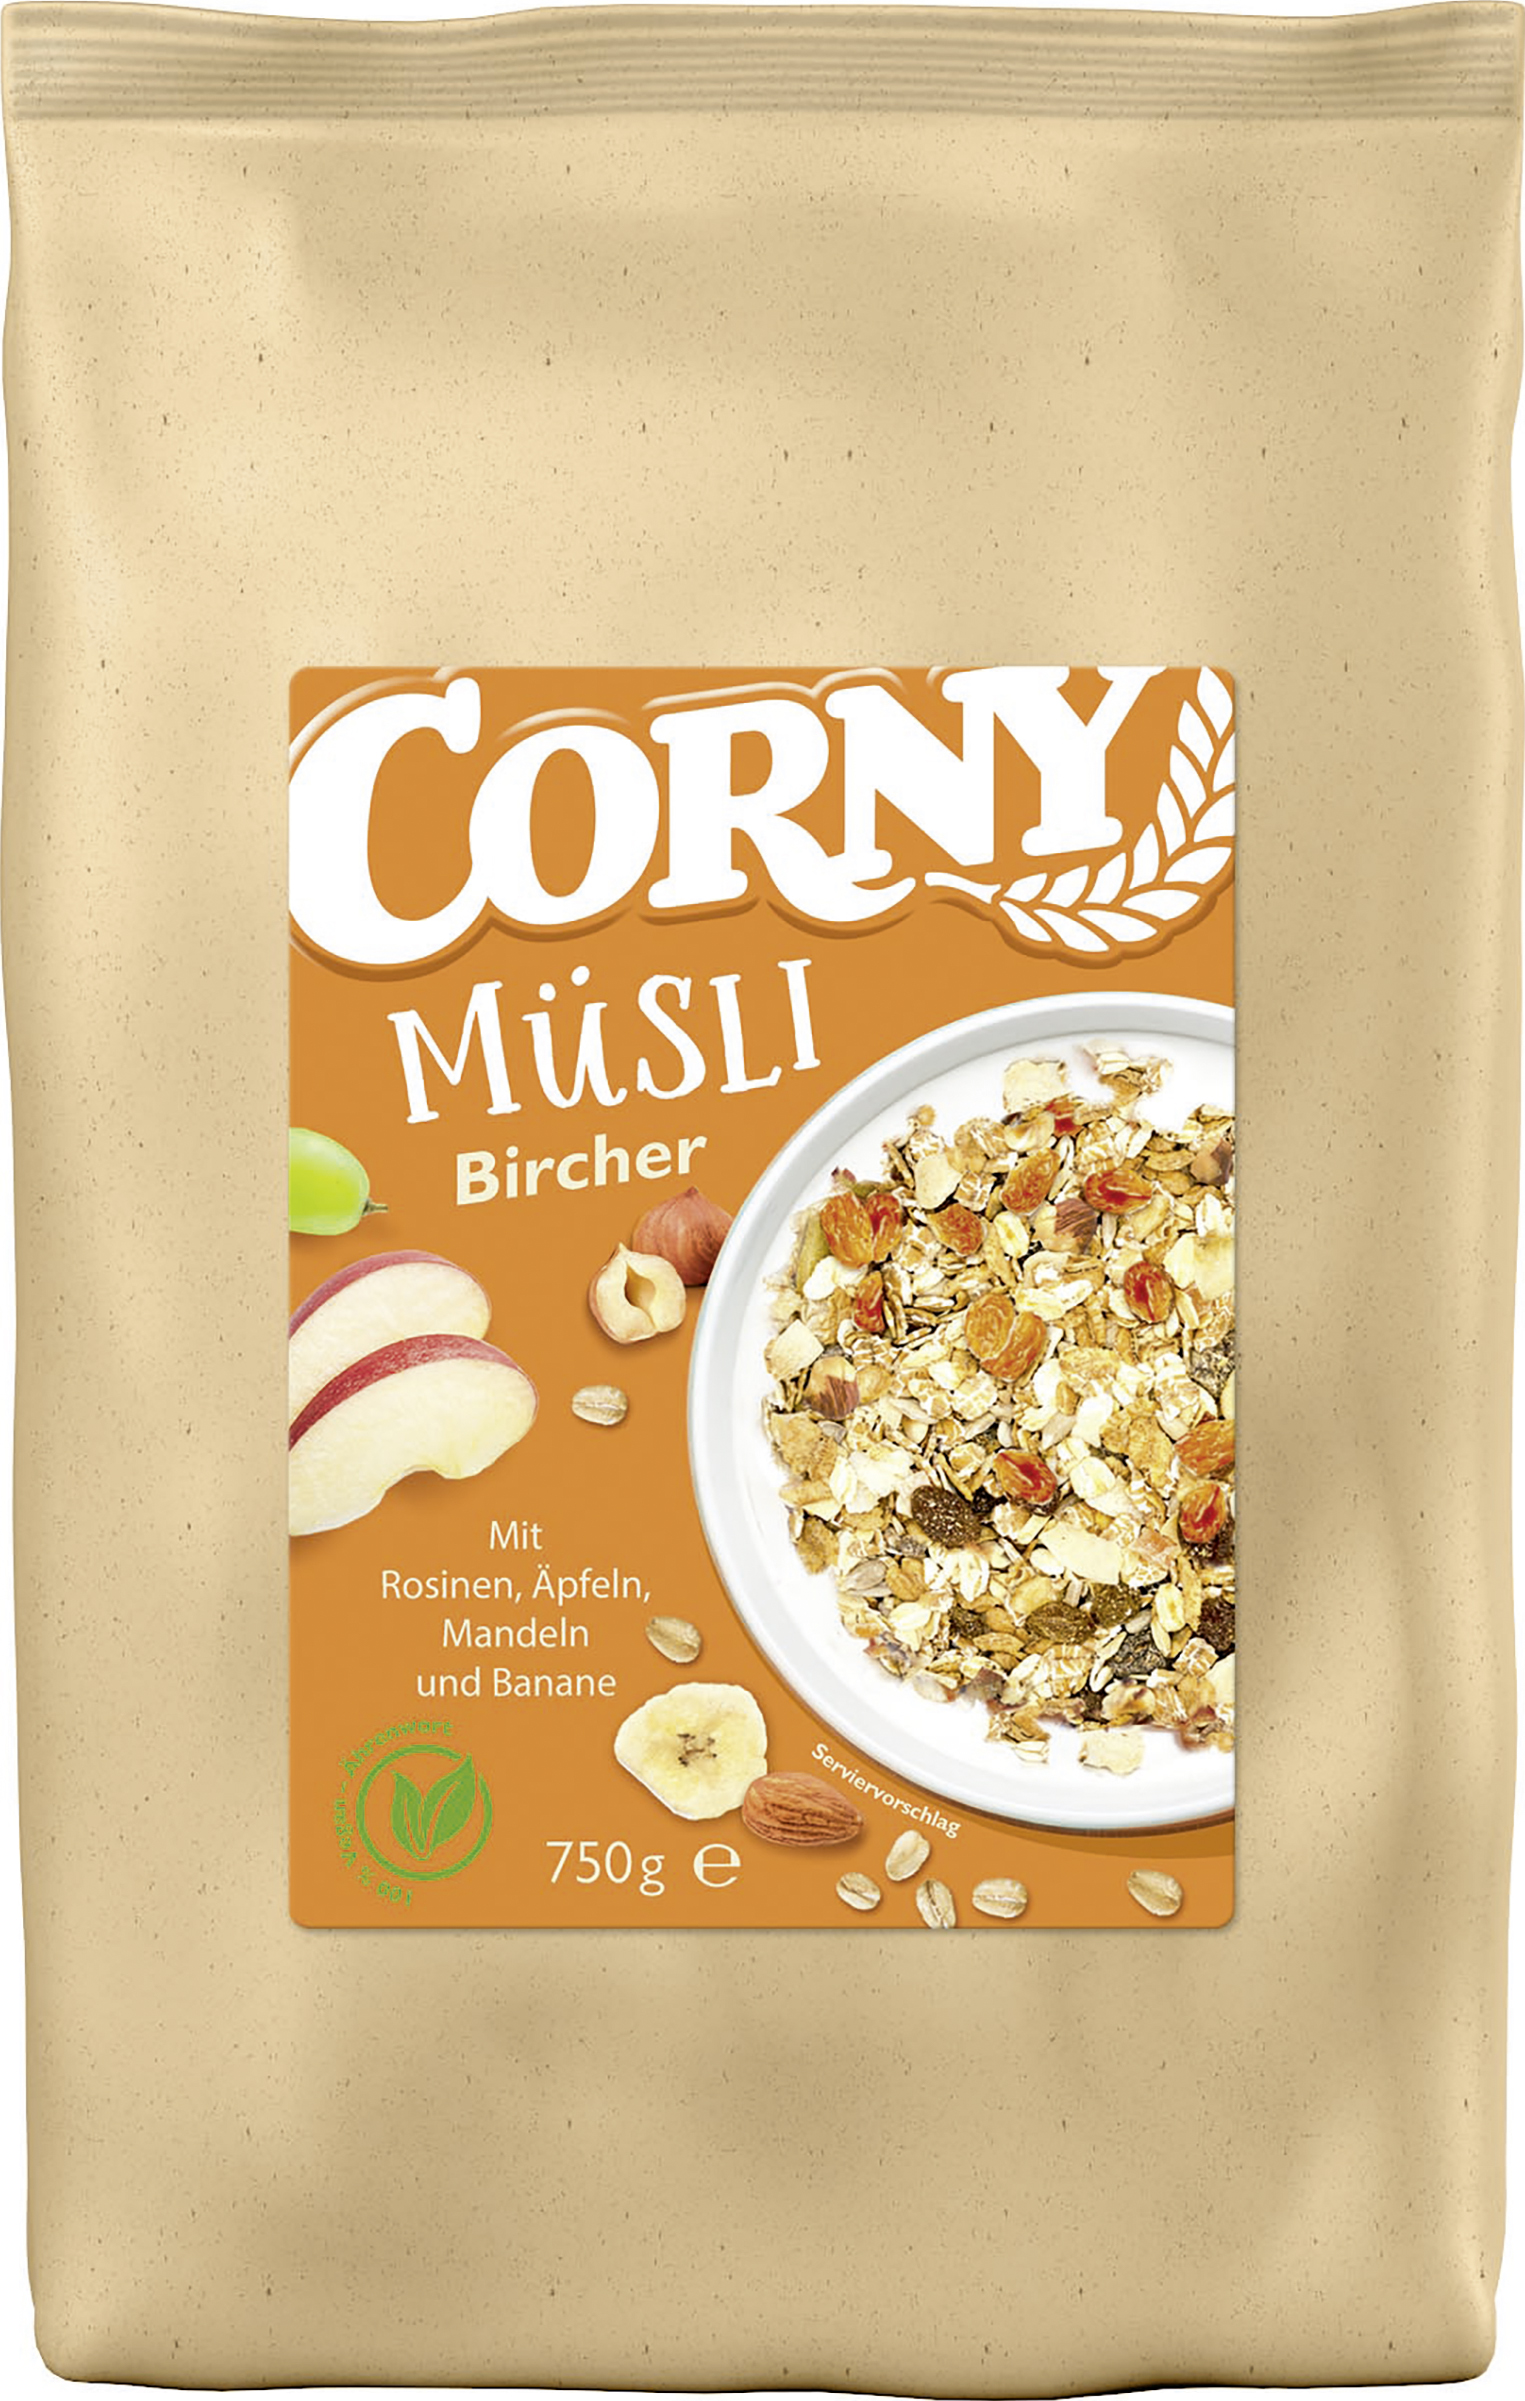 Corny Müsli Bircher 750g Beutel